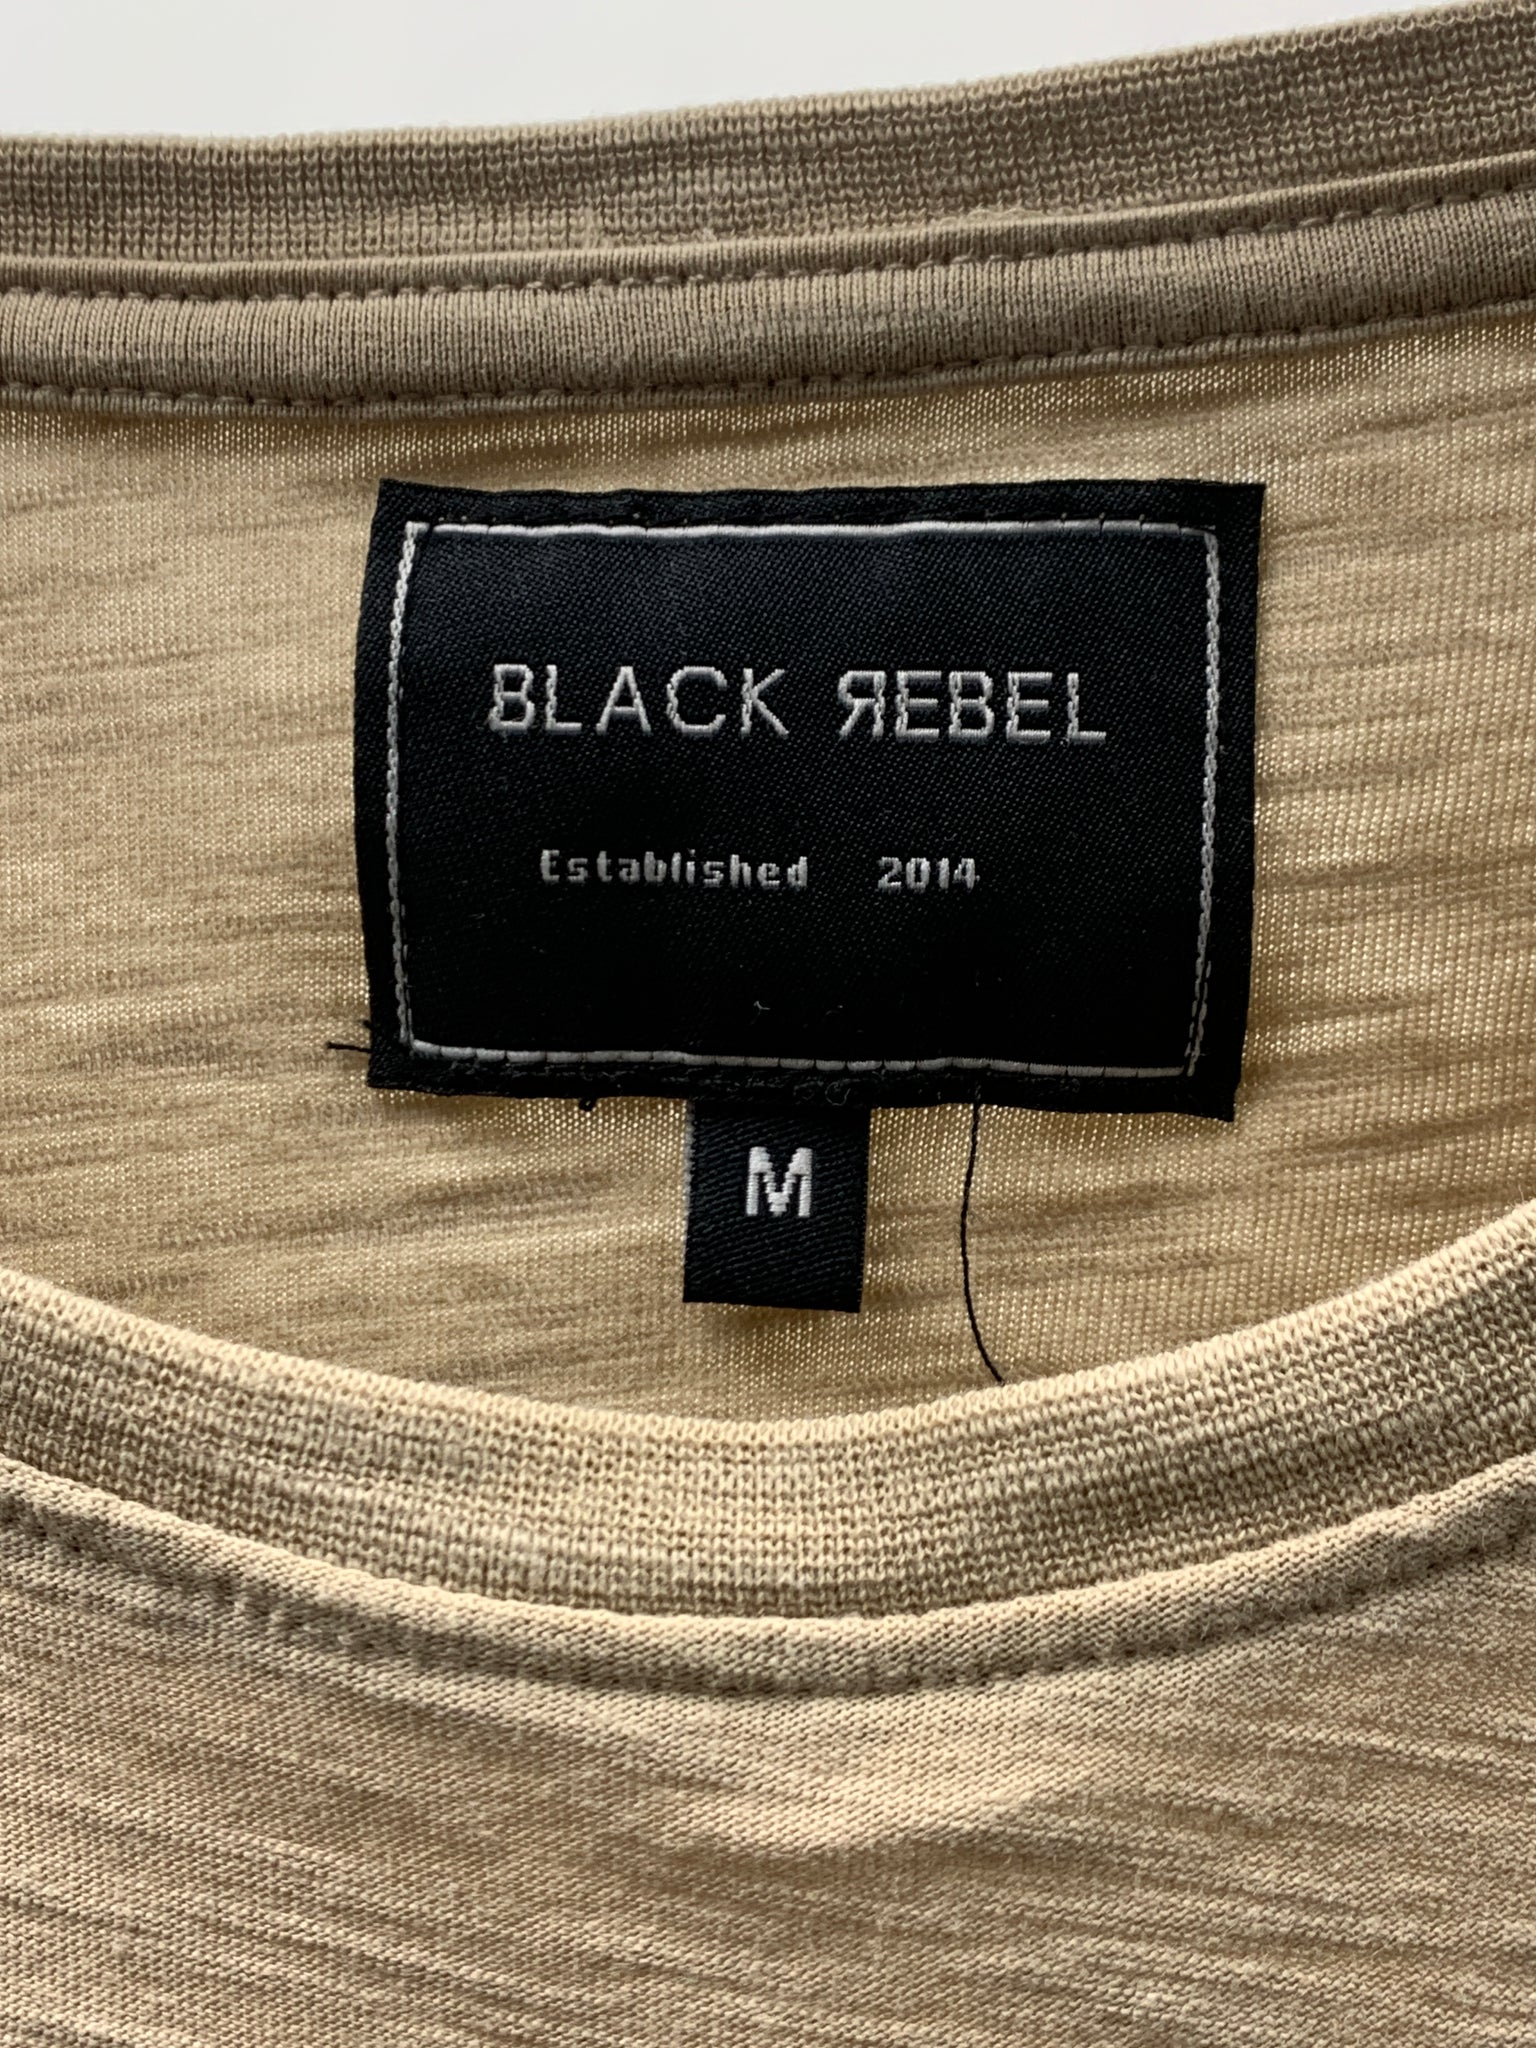 Black rebel t-shirt